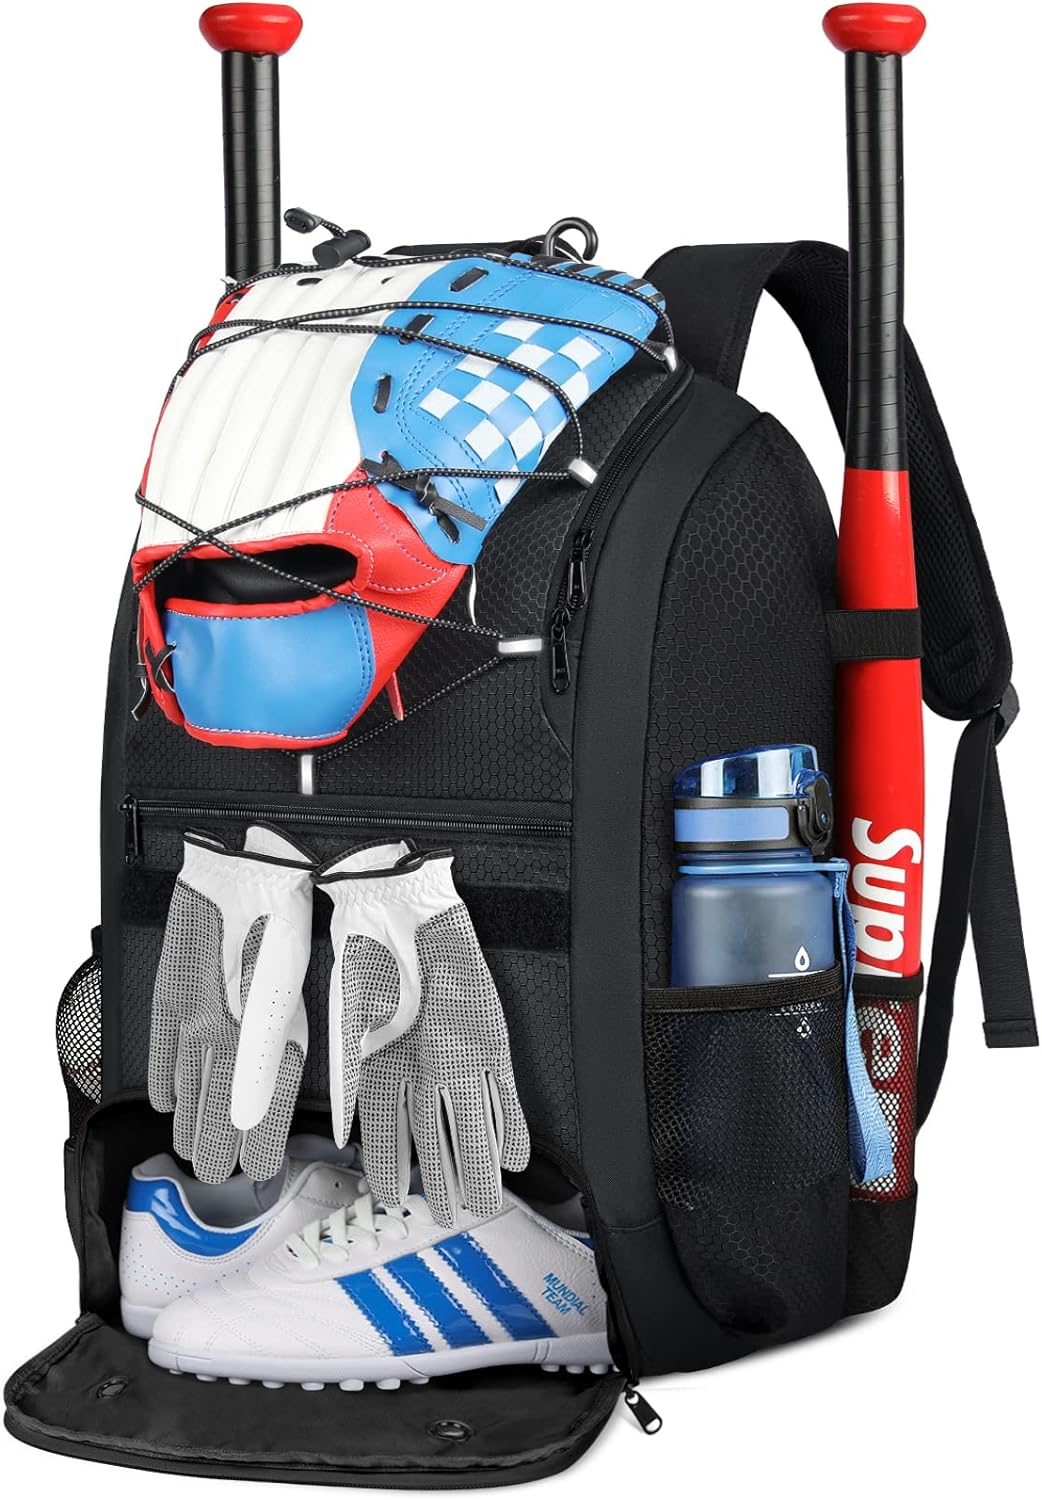 sdysm baseball bag baseball backpack with shoe compartment lightweight softball bat bag with fence hook softball backpac